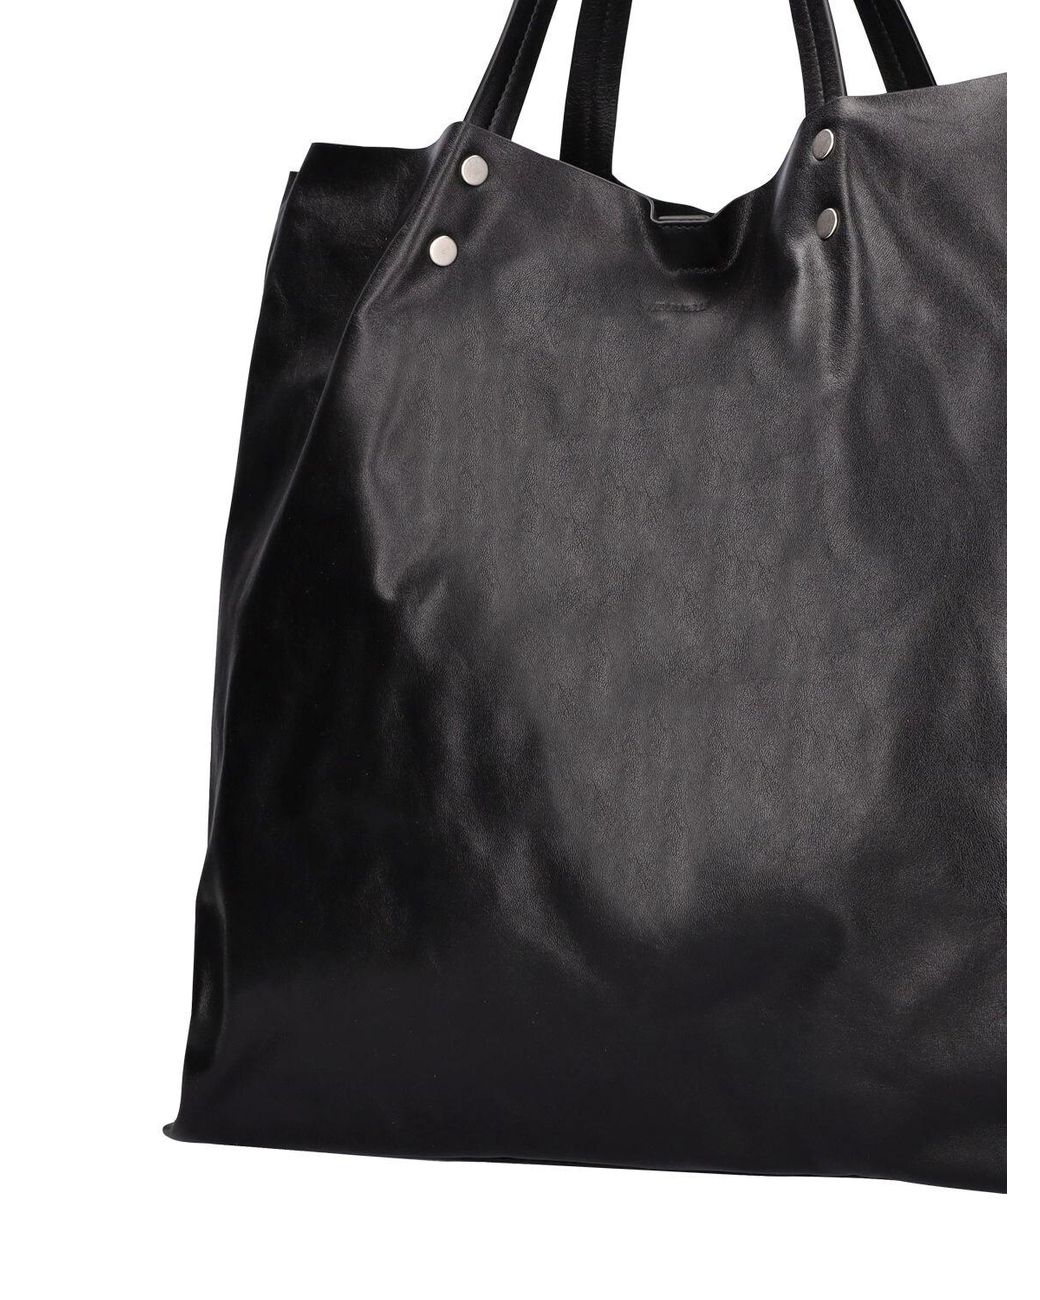 Jil Sander Rivet Medium Leather Tote Bag in Black for Men - Lyst